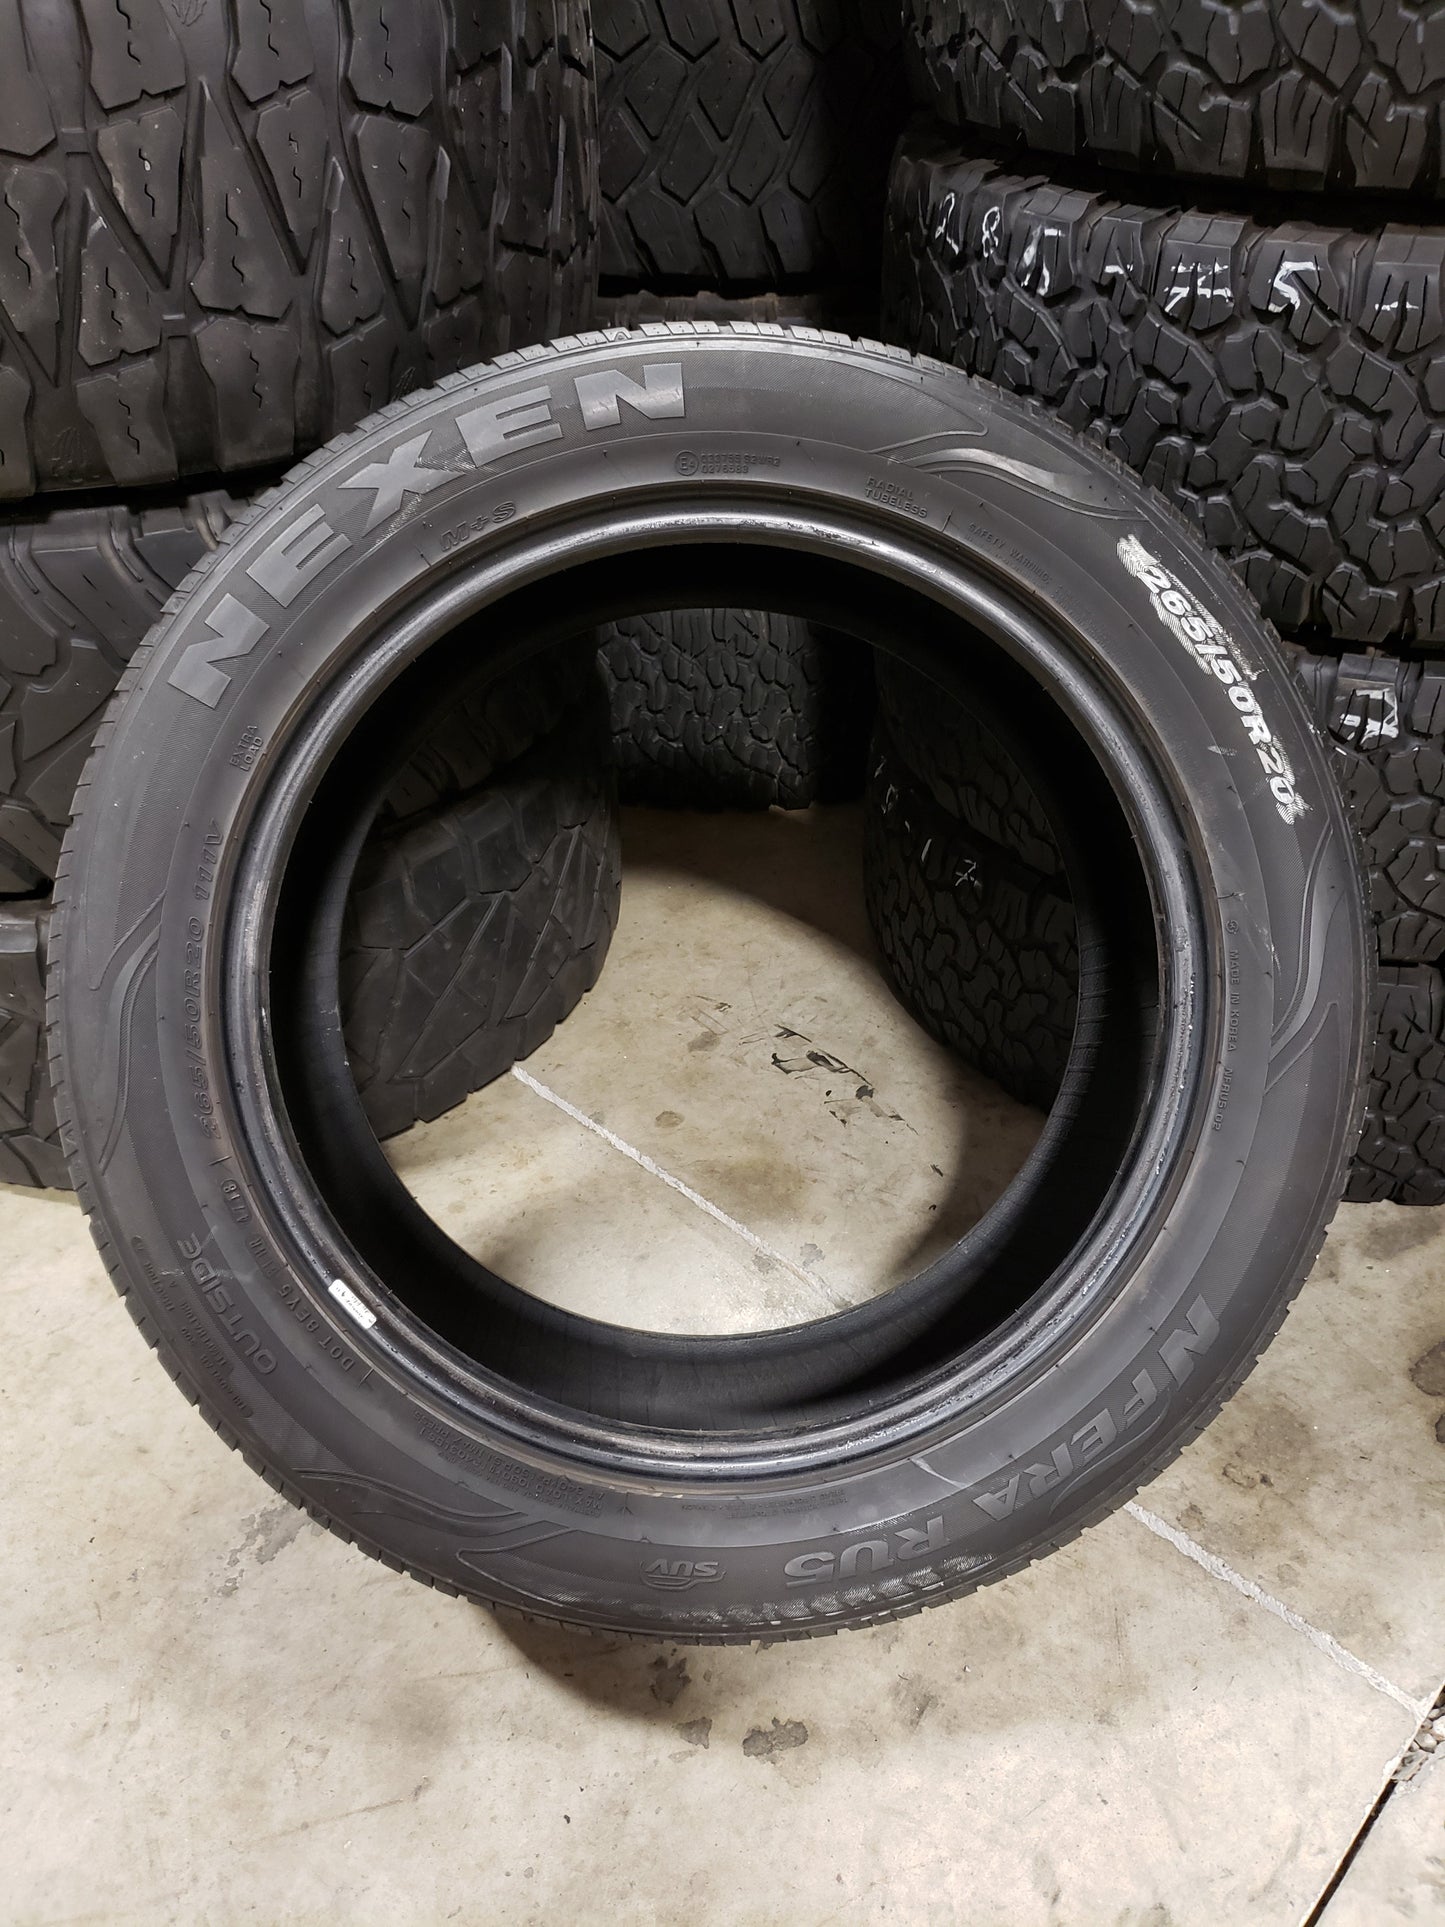 SET OF 2 245/50R20 Nexen Nfera RU5 (suv) 111 V XL - Used Tires